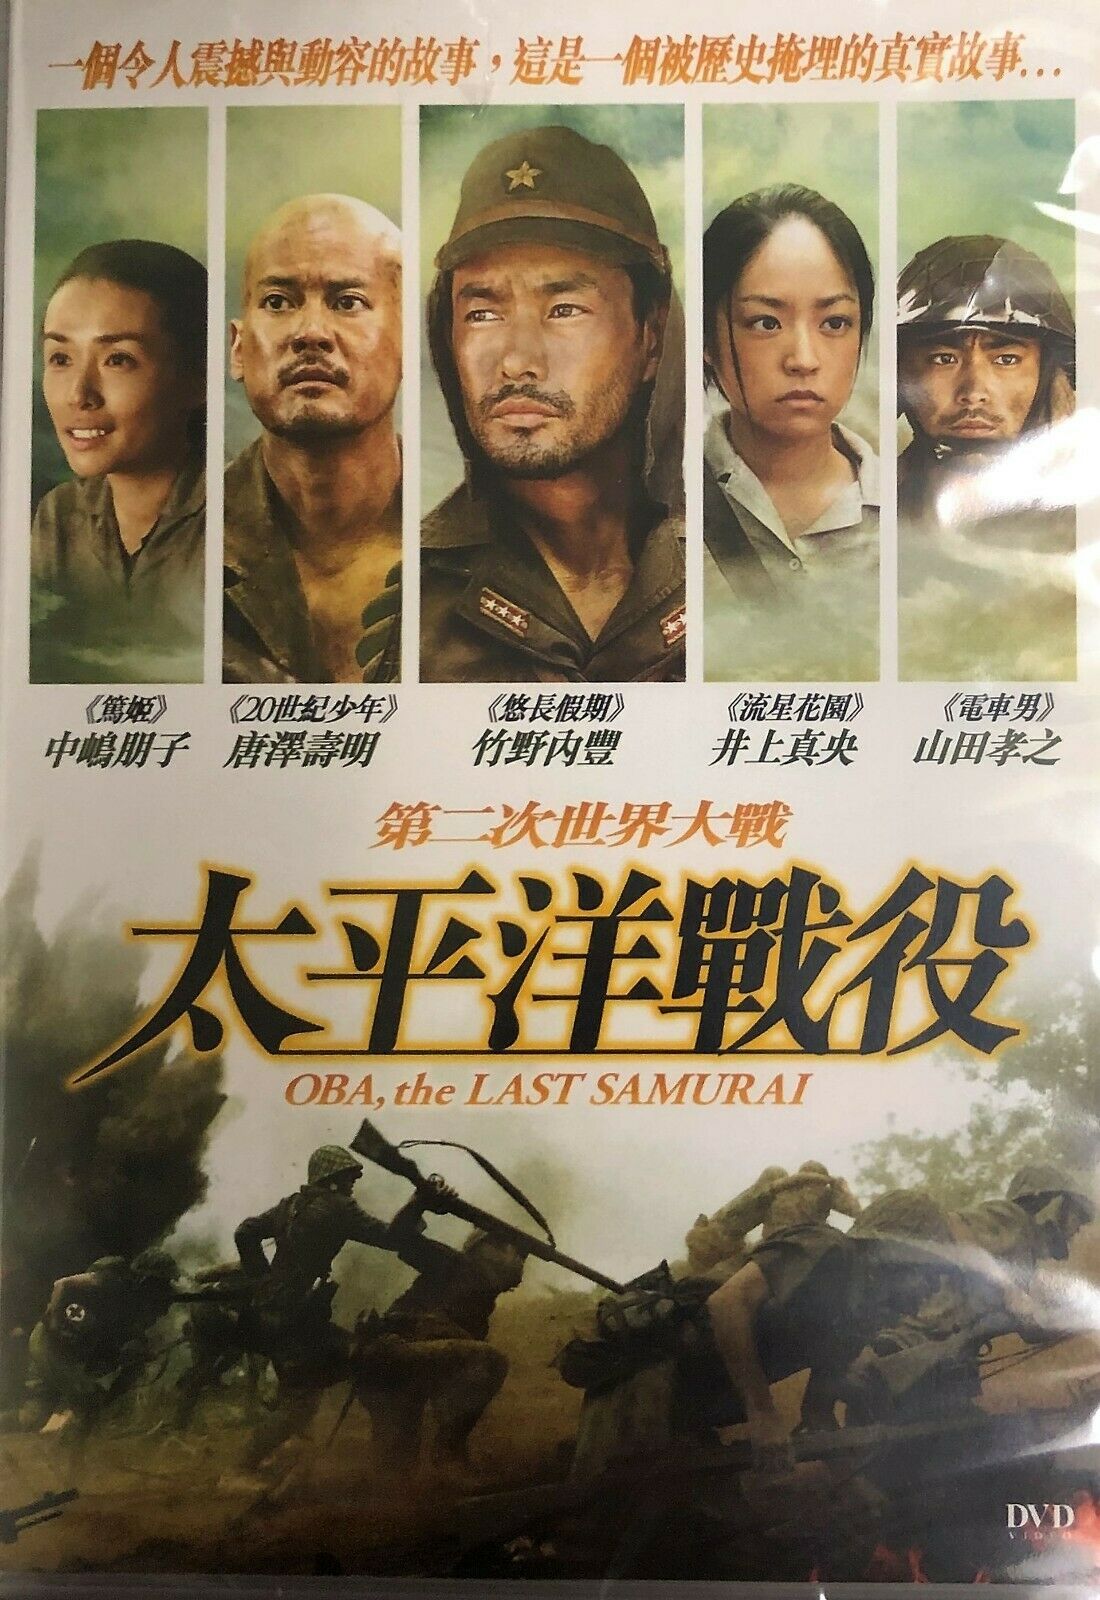 OBA, THE LAST SAMURAI 2001 (JAPANESE MOVIE) DVD WITH ENGLISH SUB 